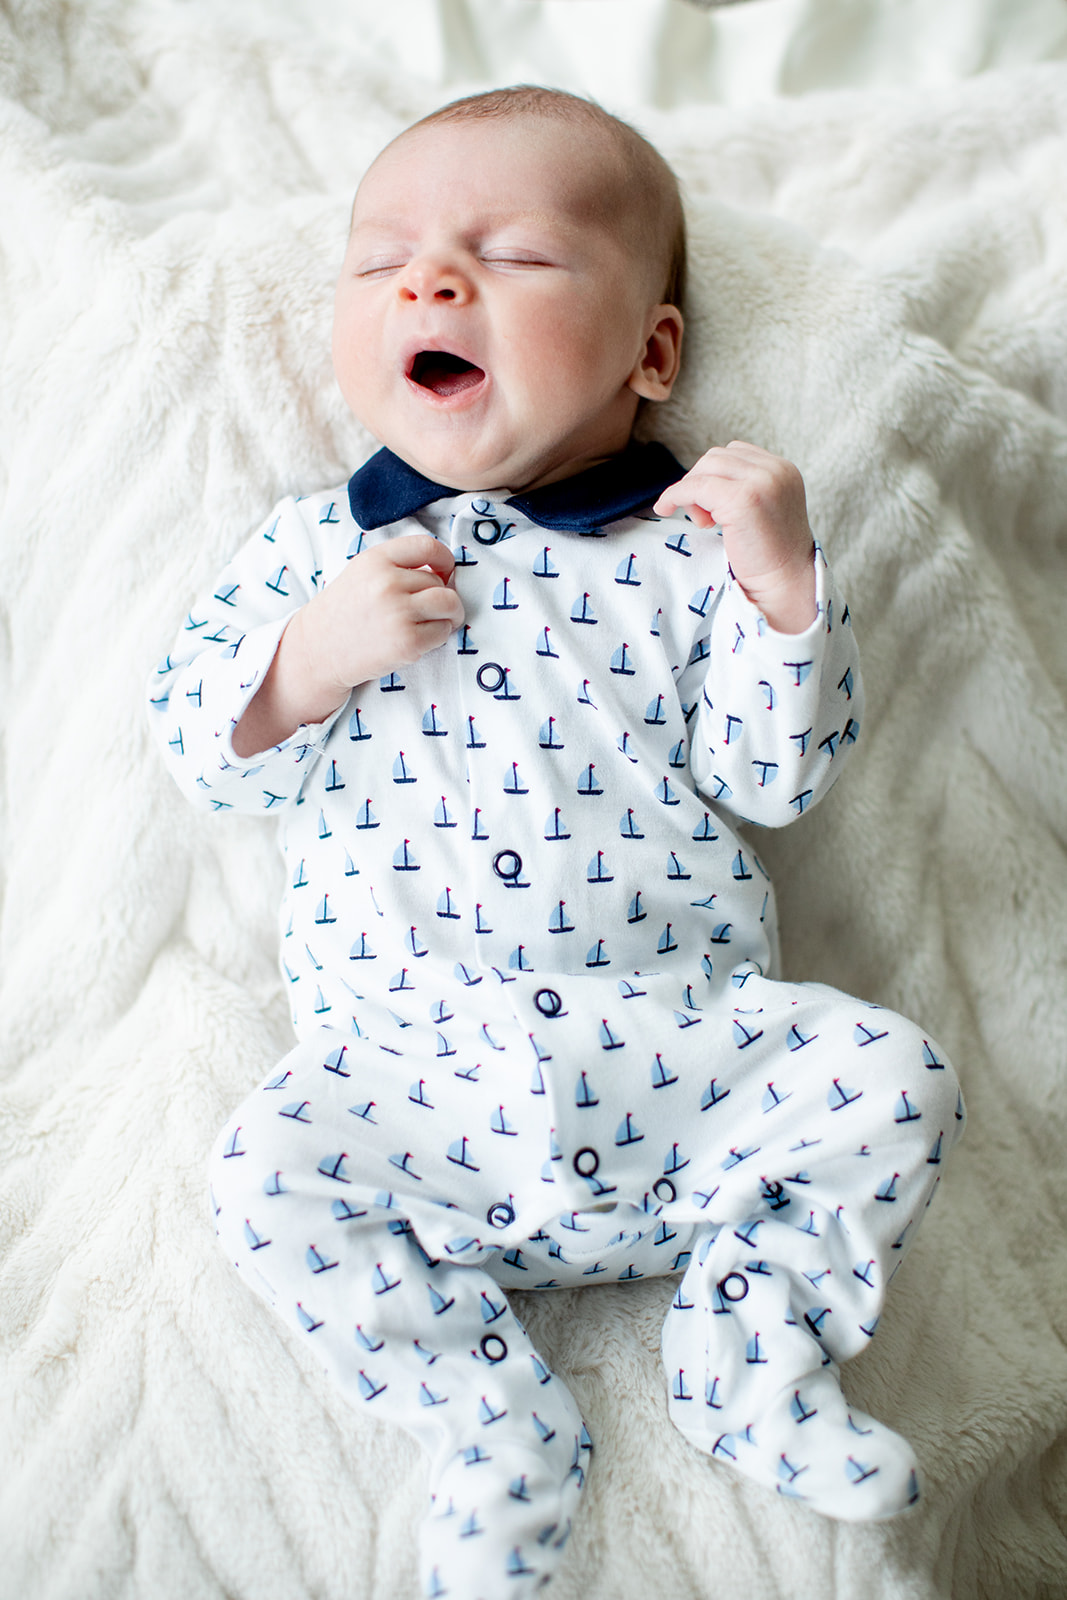 Baby Boy Henrys Lifestyle Newborn Shoot - Image Property of www.j-dphoto.com